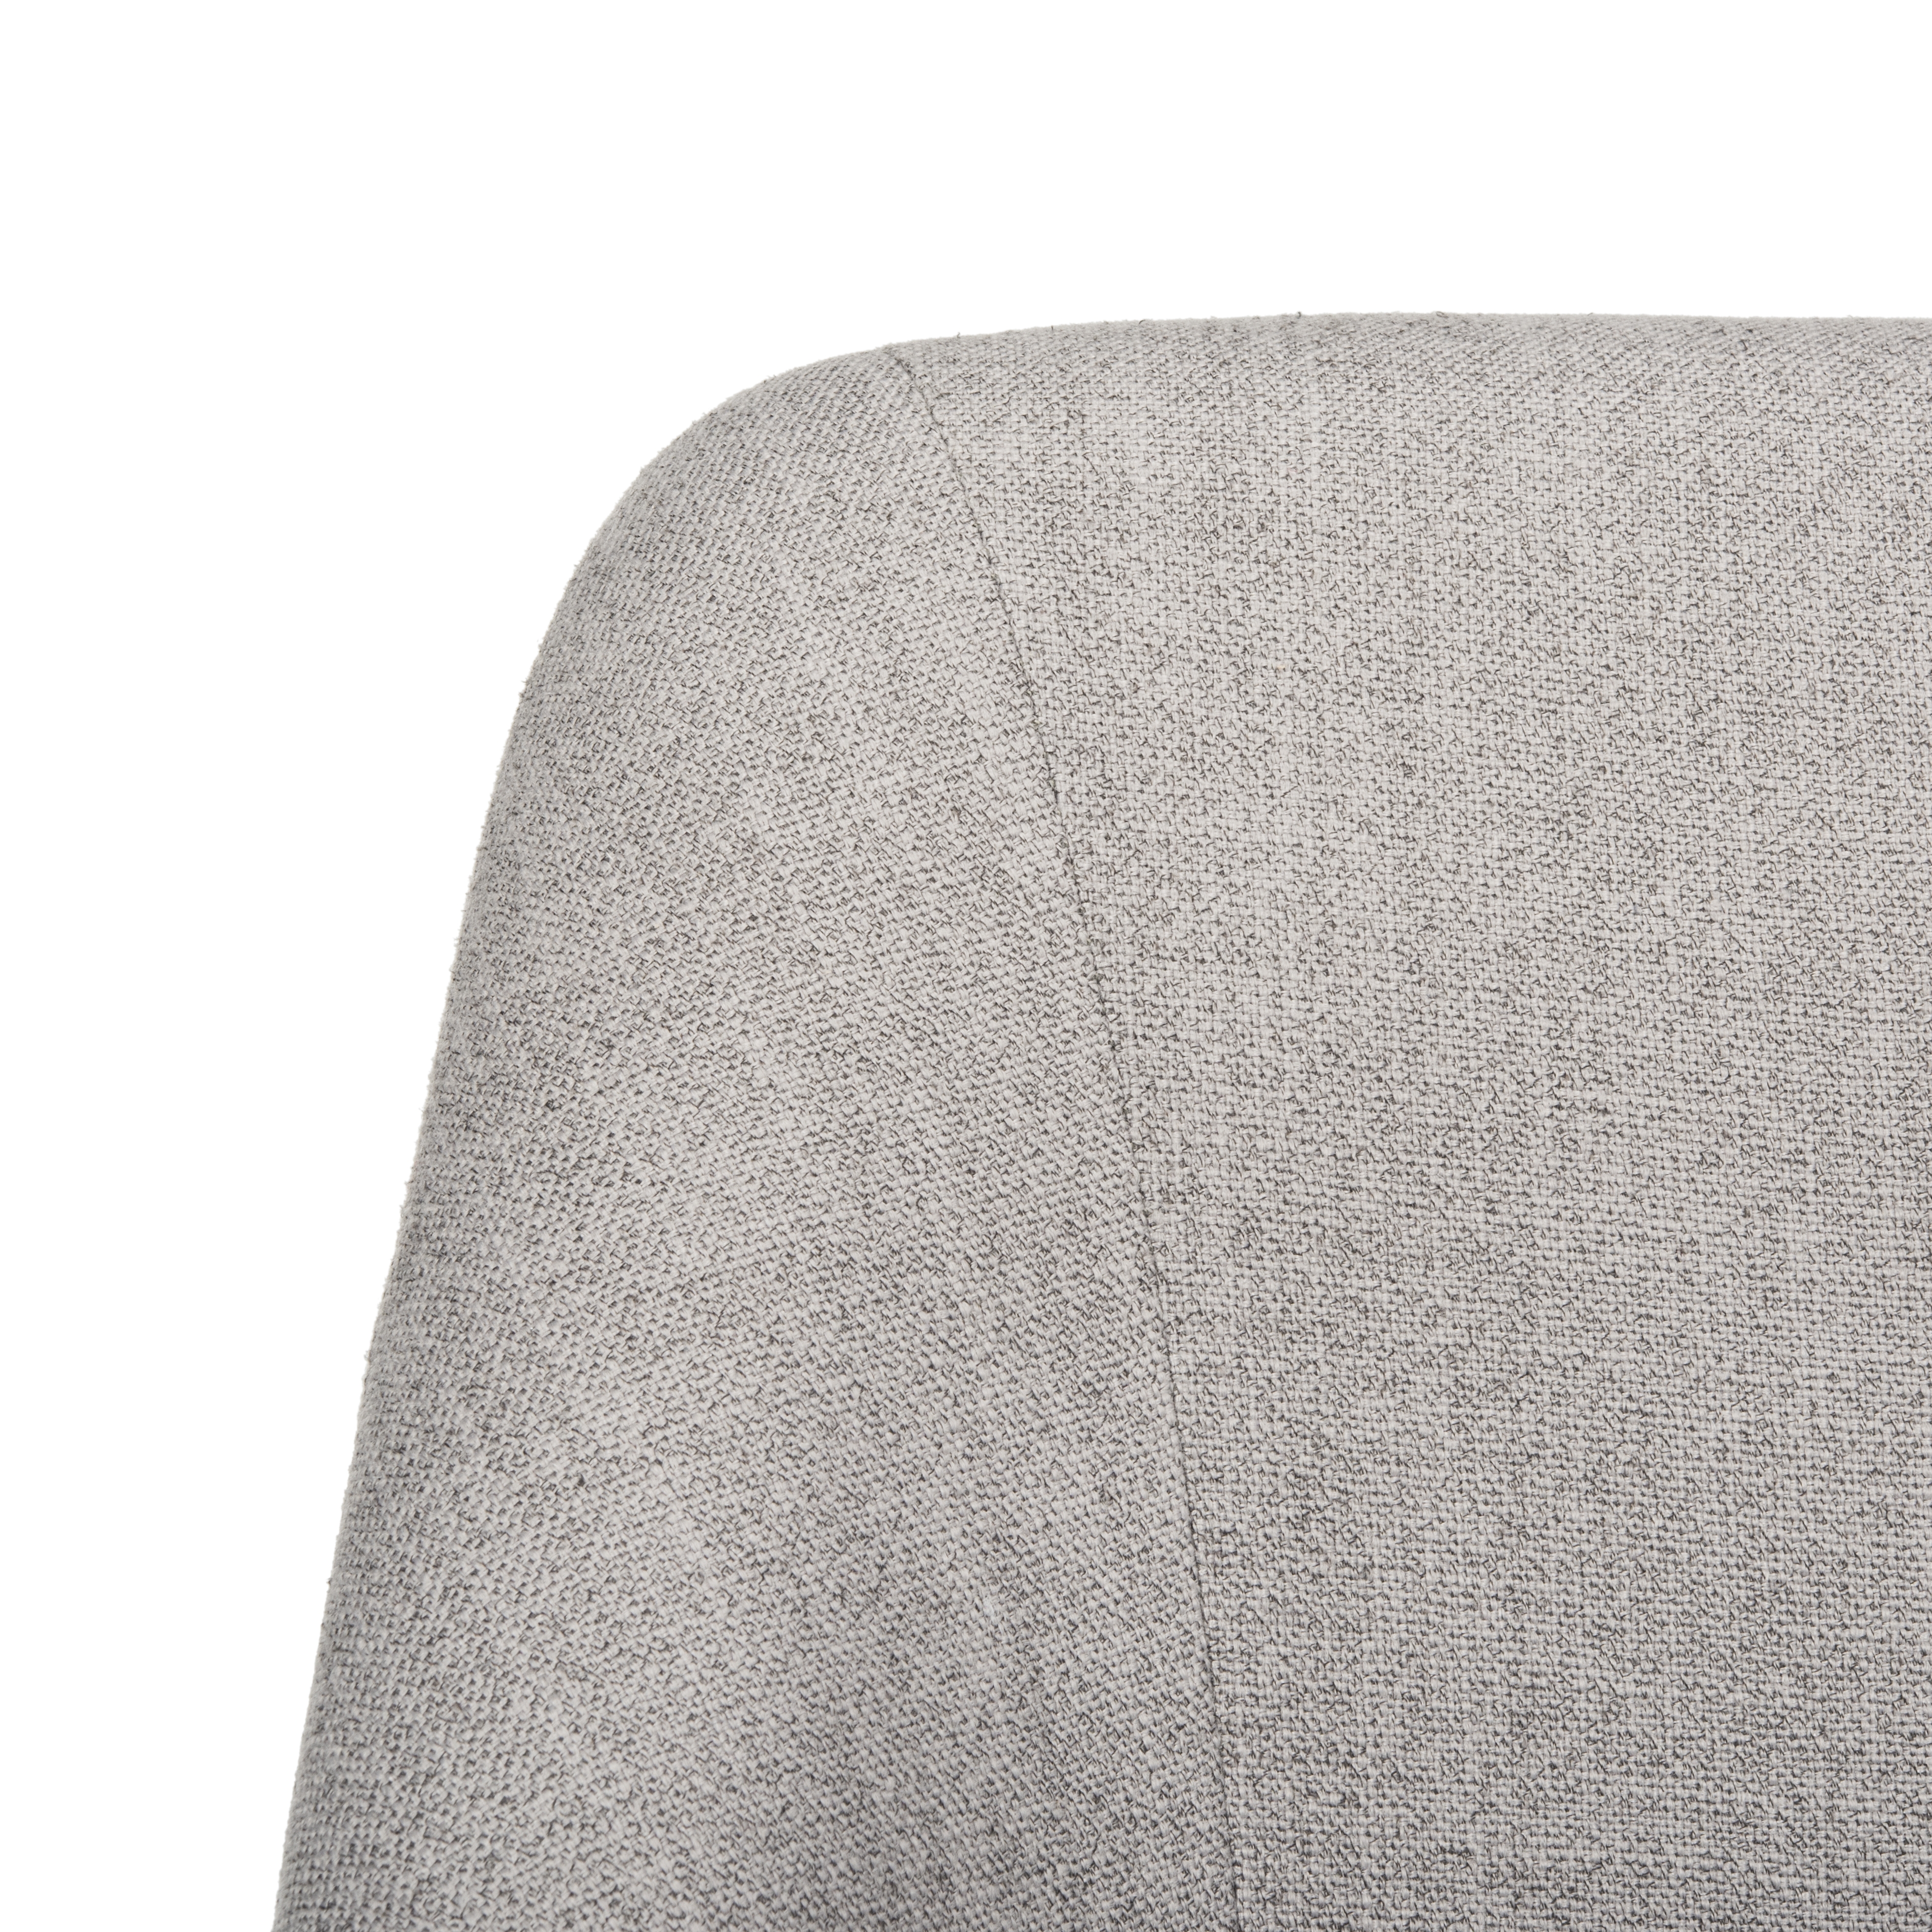 Adrienne Linen Chrome Leg Swivel Office Chair - Grey/Chrome - Arlo Home - Image 4